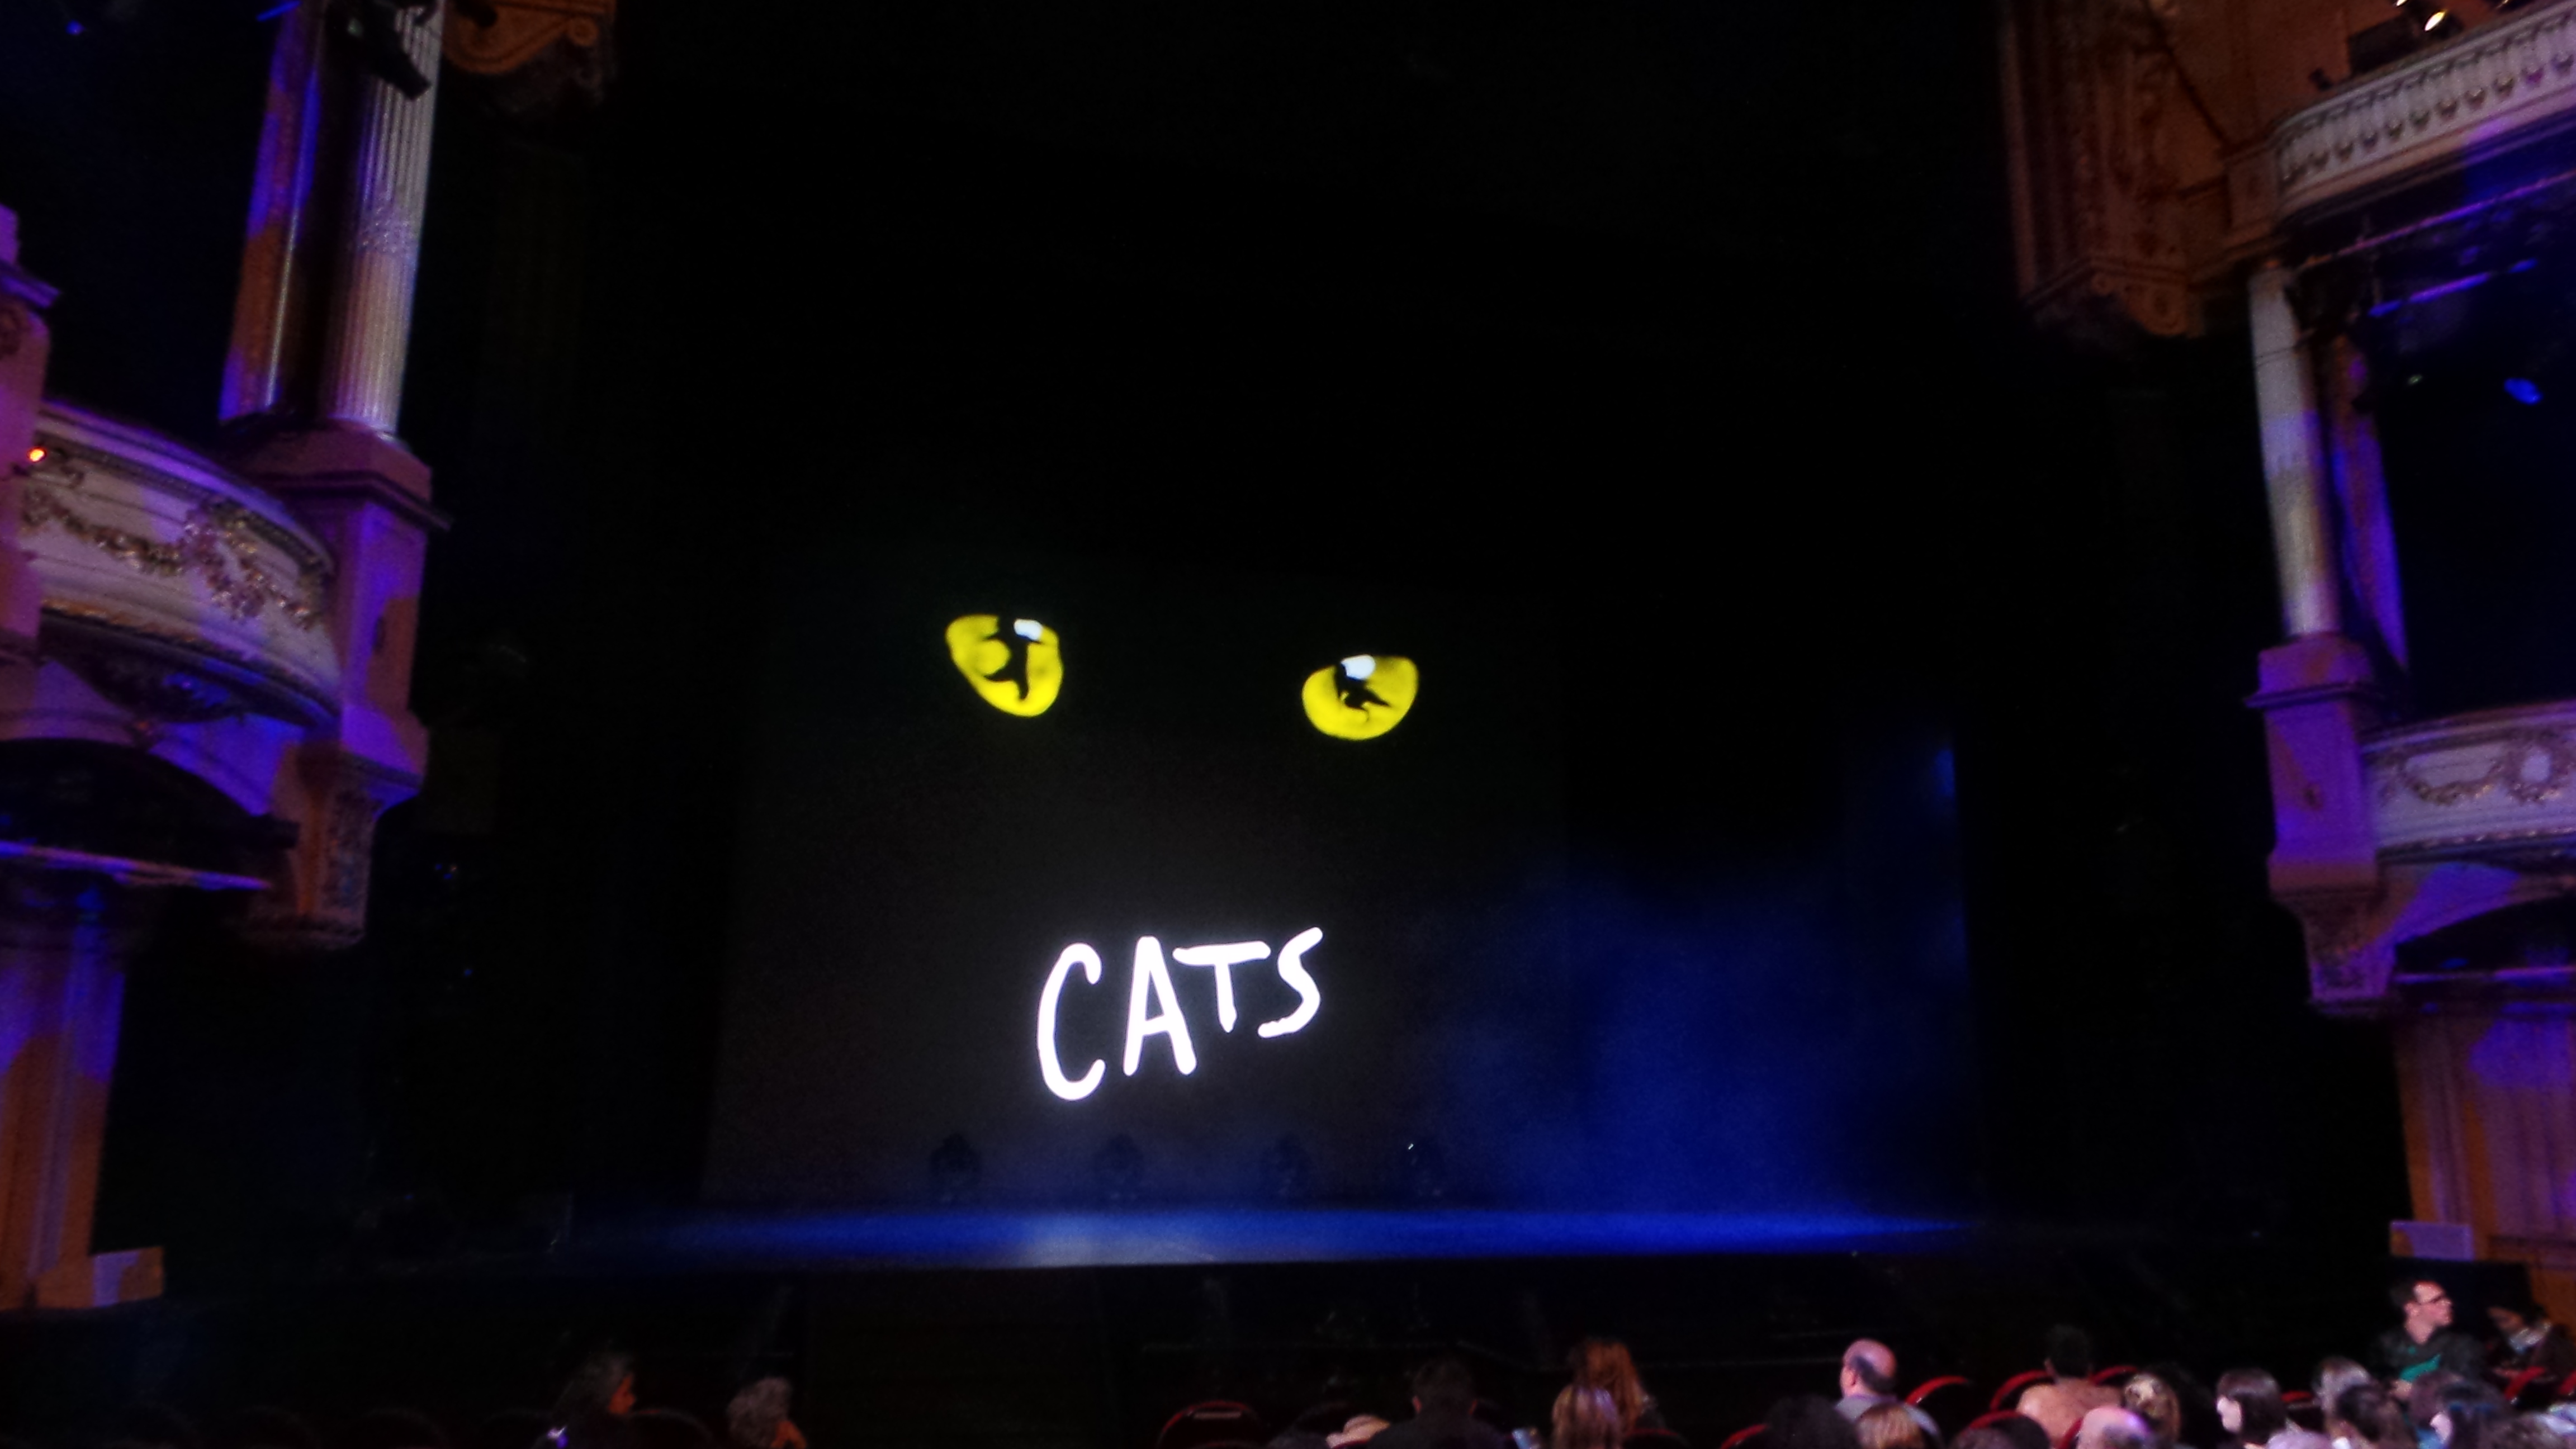 CATS Le Musical - Theatre Mogador Paris France Octobre 2015 - 20150427_180357